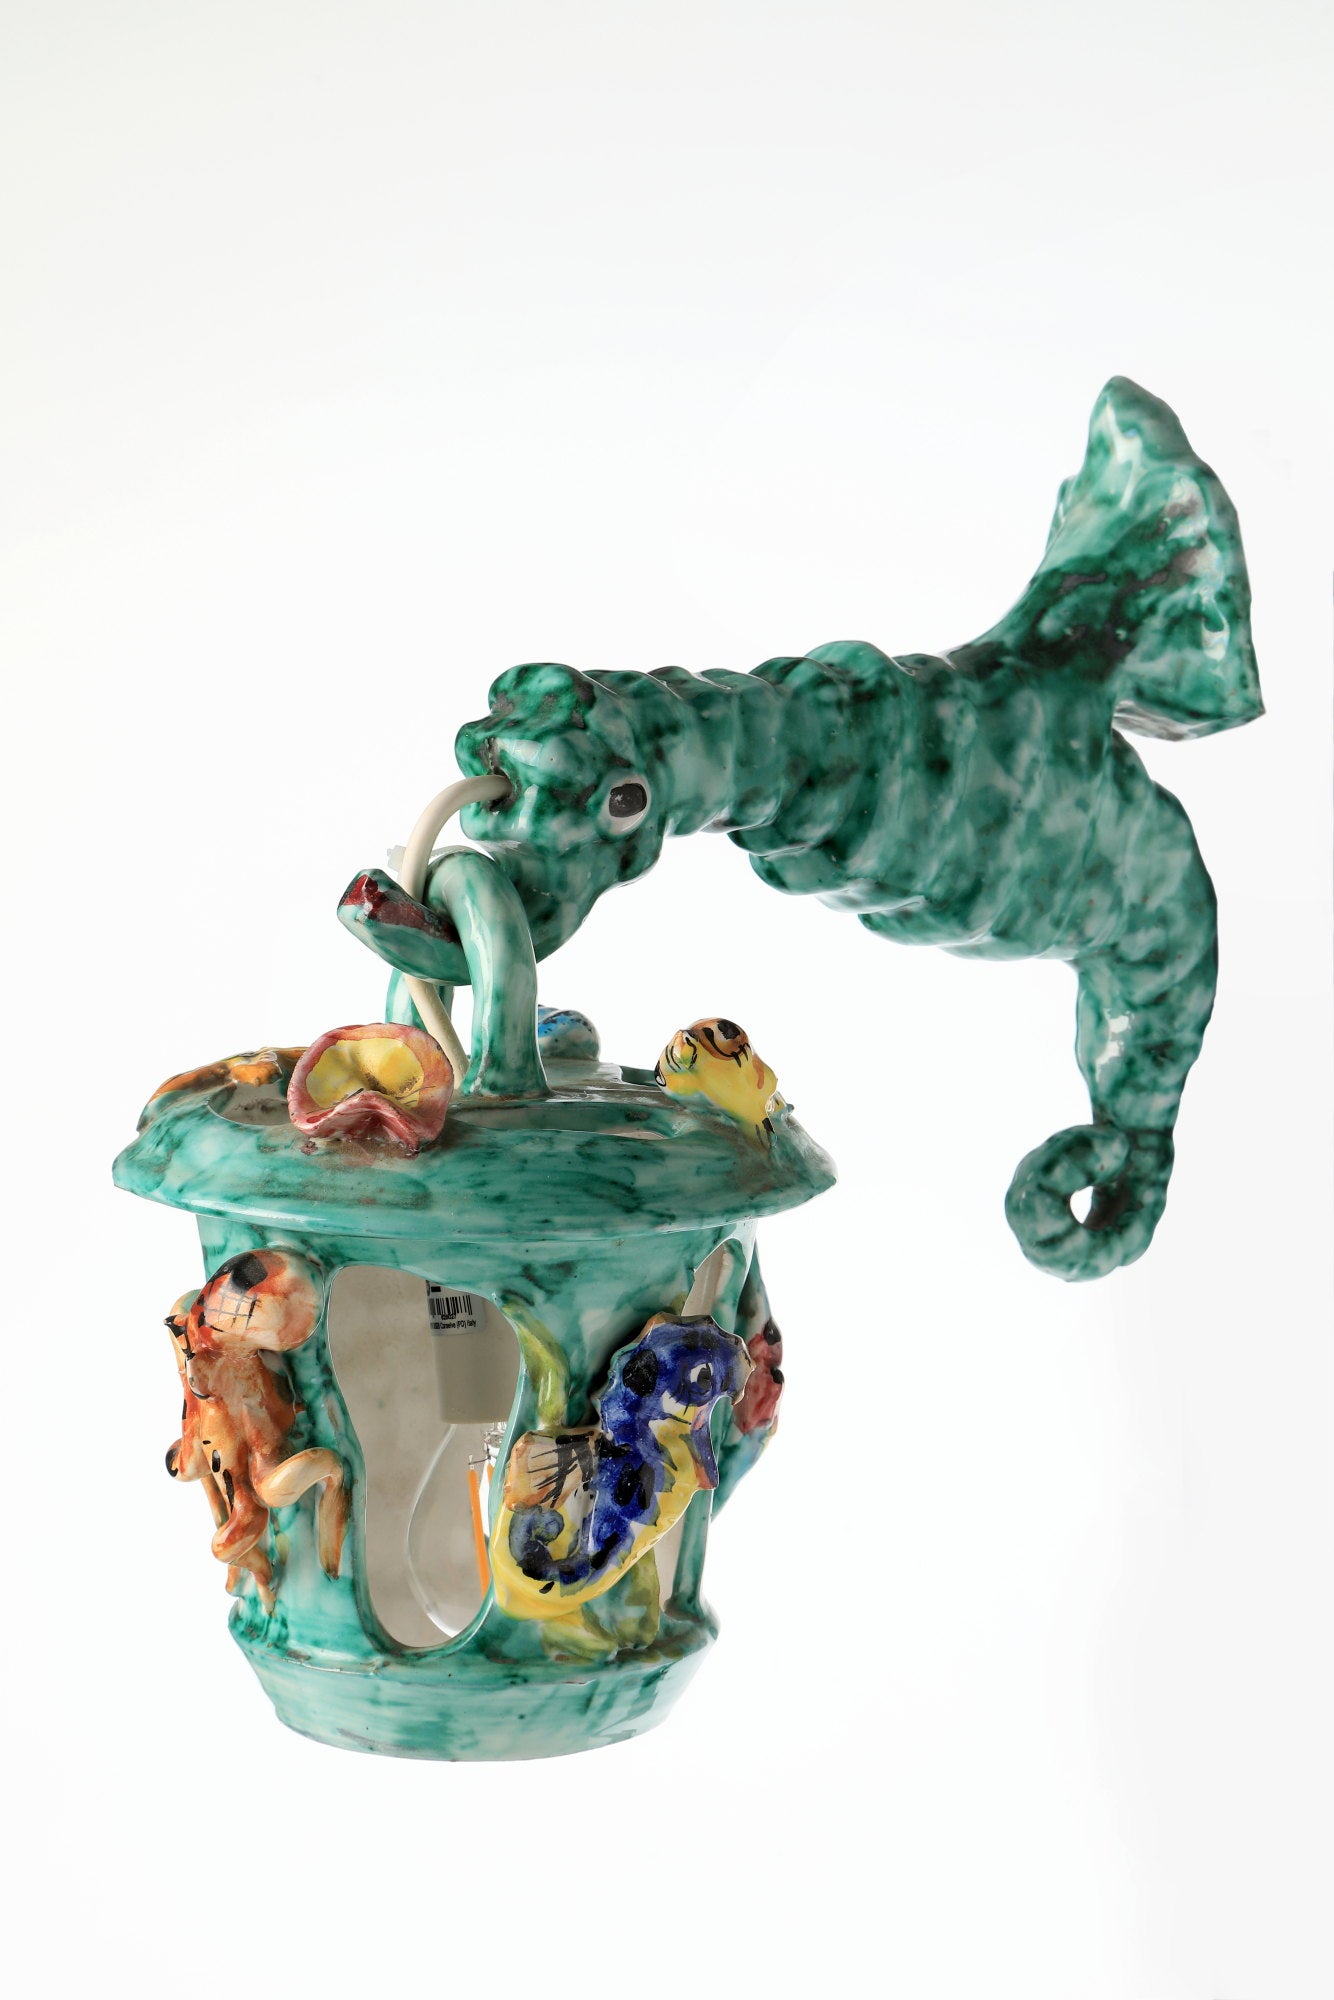 Vietri ceramic lantern with marine figures